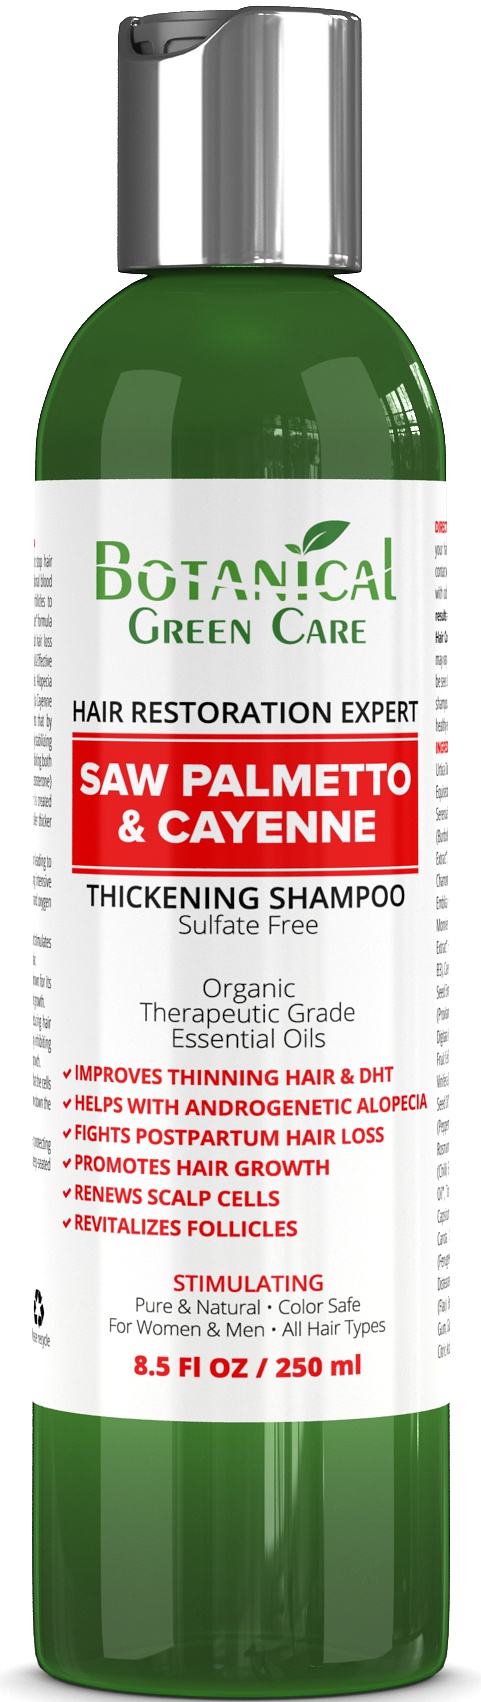 Botanical Green Care "Saw Palmetto & Cayenne” Anti-hair Loss Sulfate-free Stimulating Shampoo